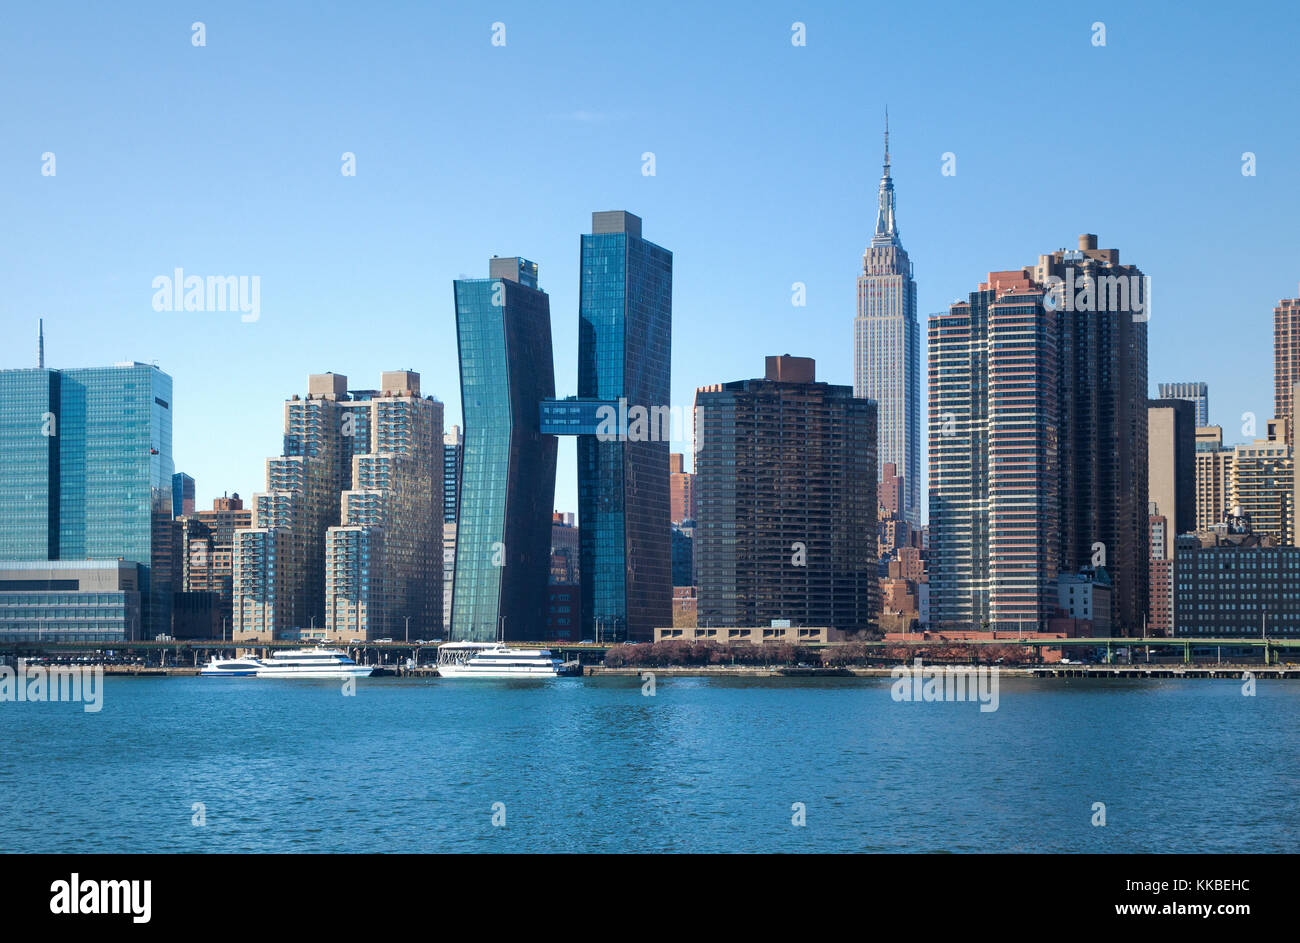 Manhattan skyline seen from Long Island City in Queens (New York City) Stock Photo